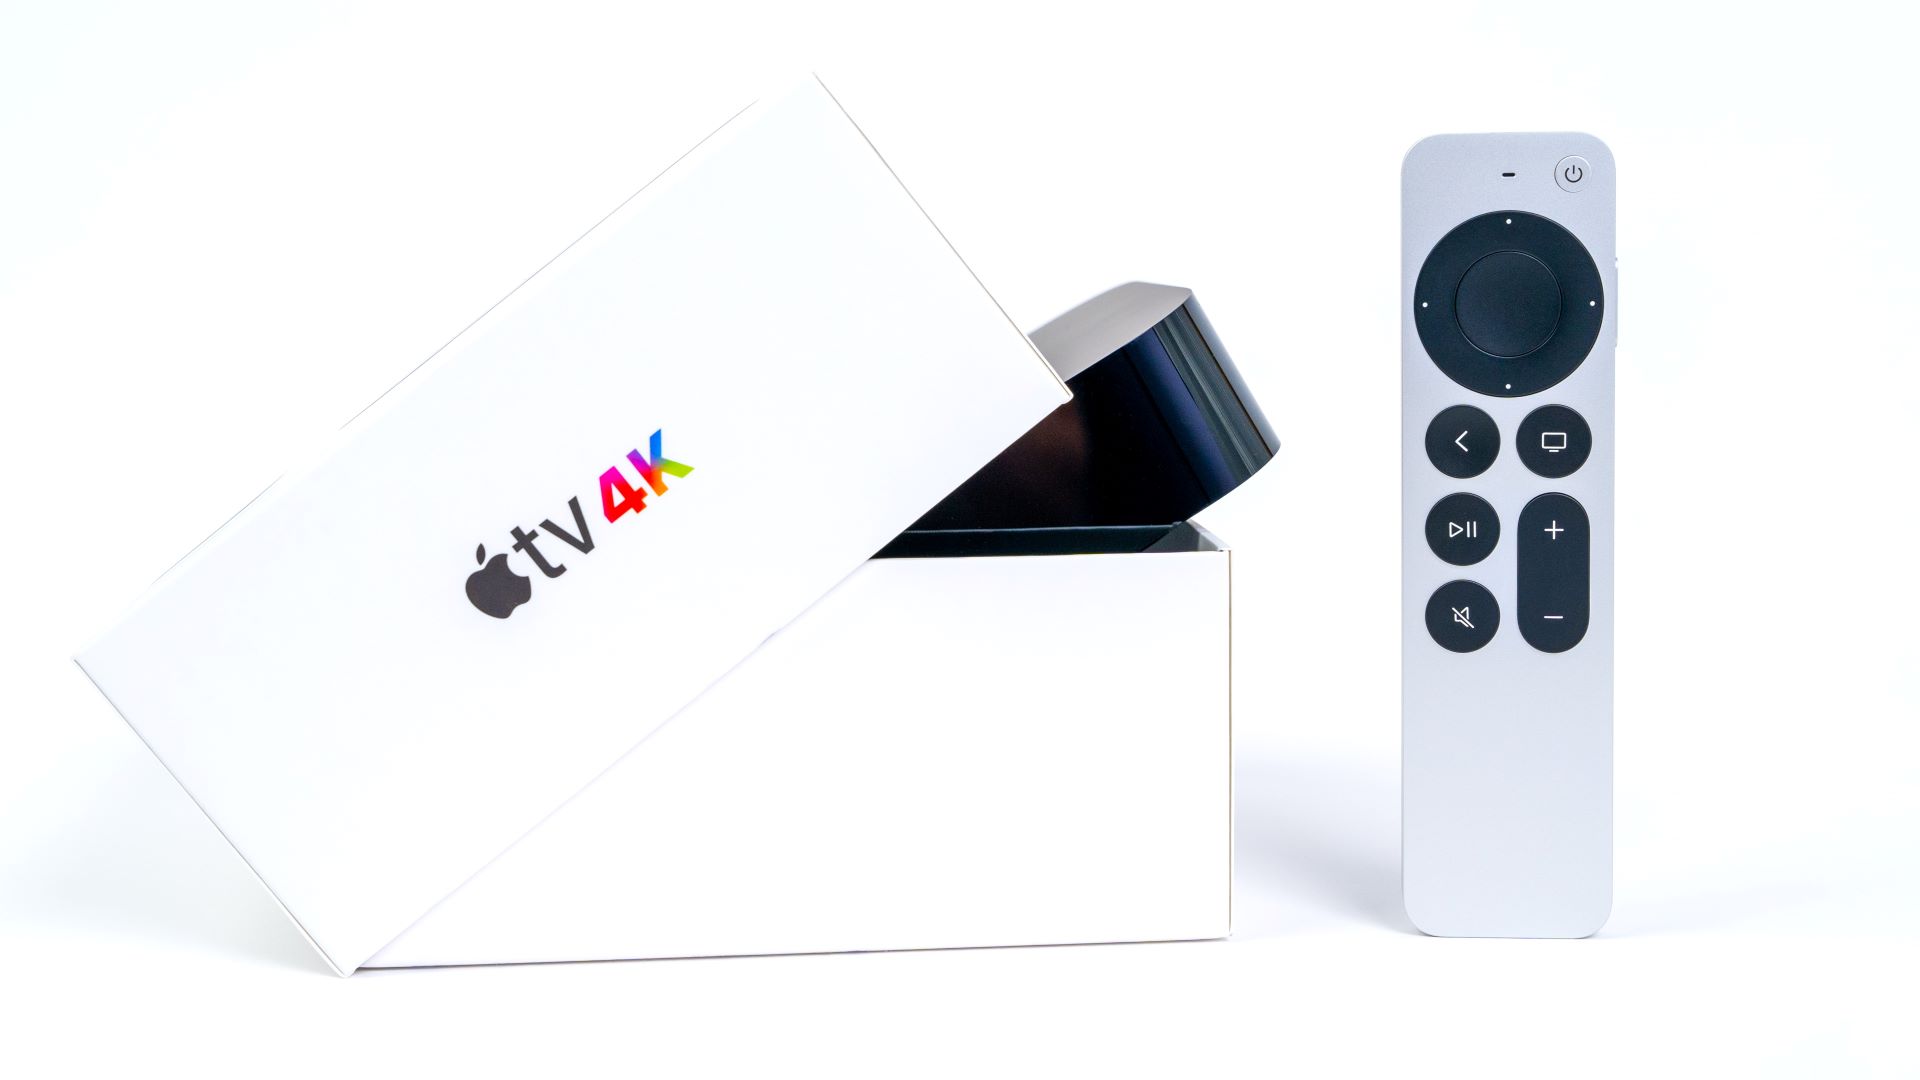  Apple TV 4K в коробке с пультом ДУ